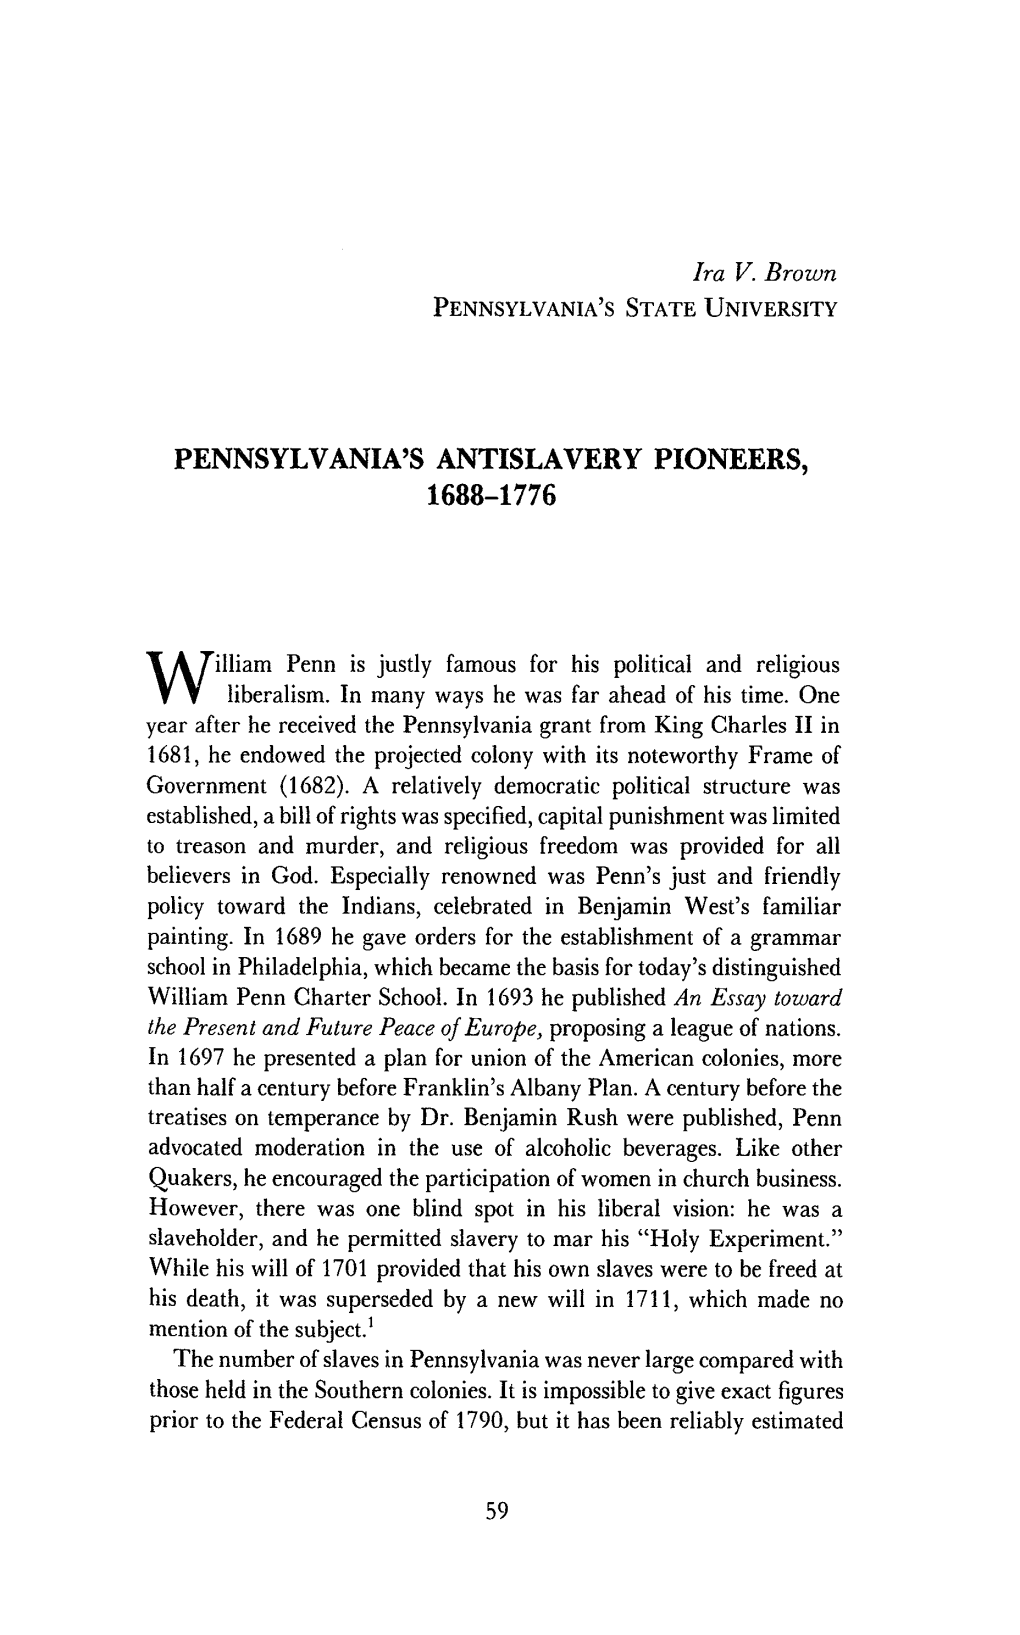 Pennsylvania's Antislavery Pioneers, 1688-1776